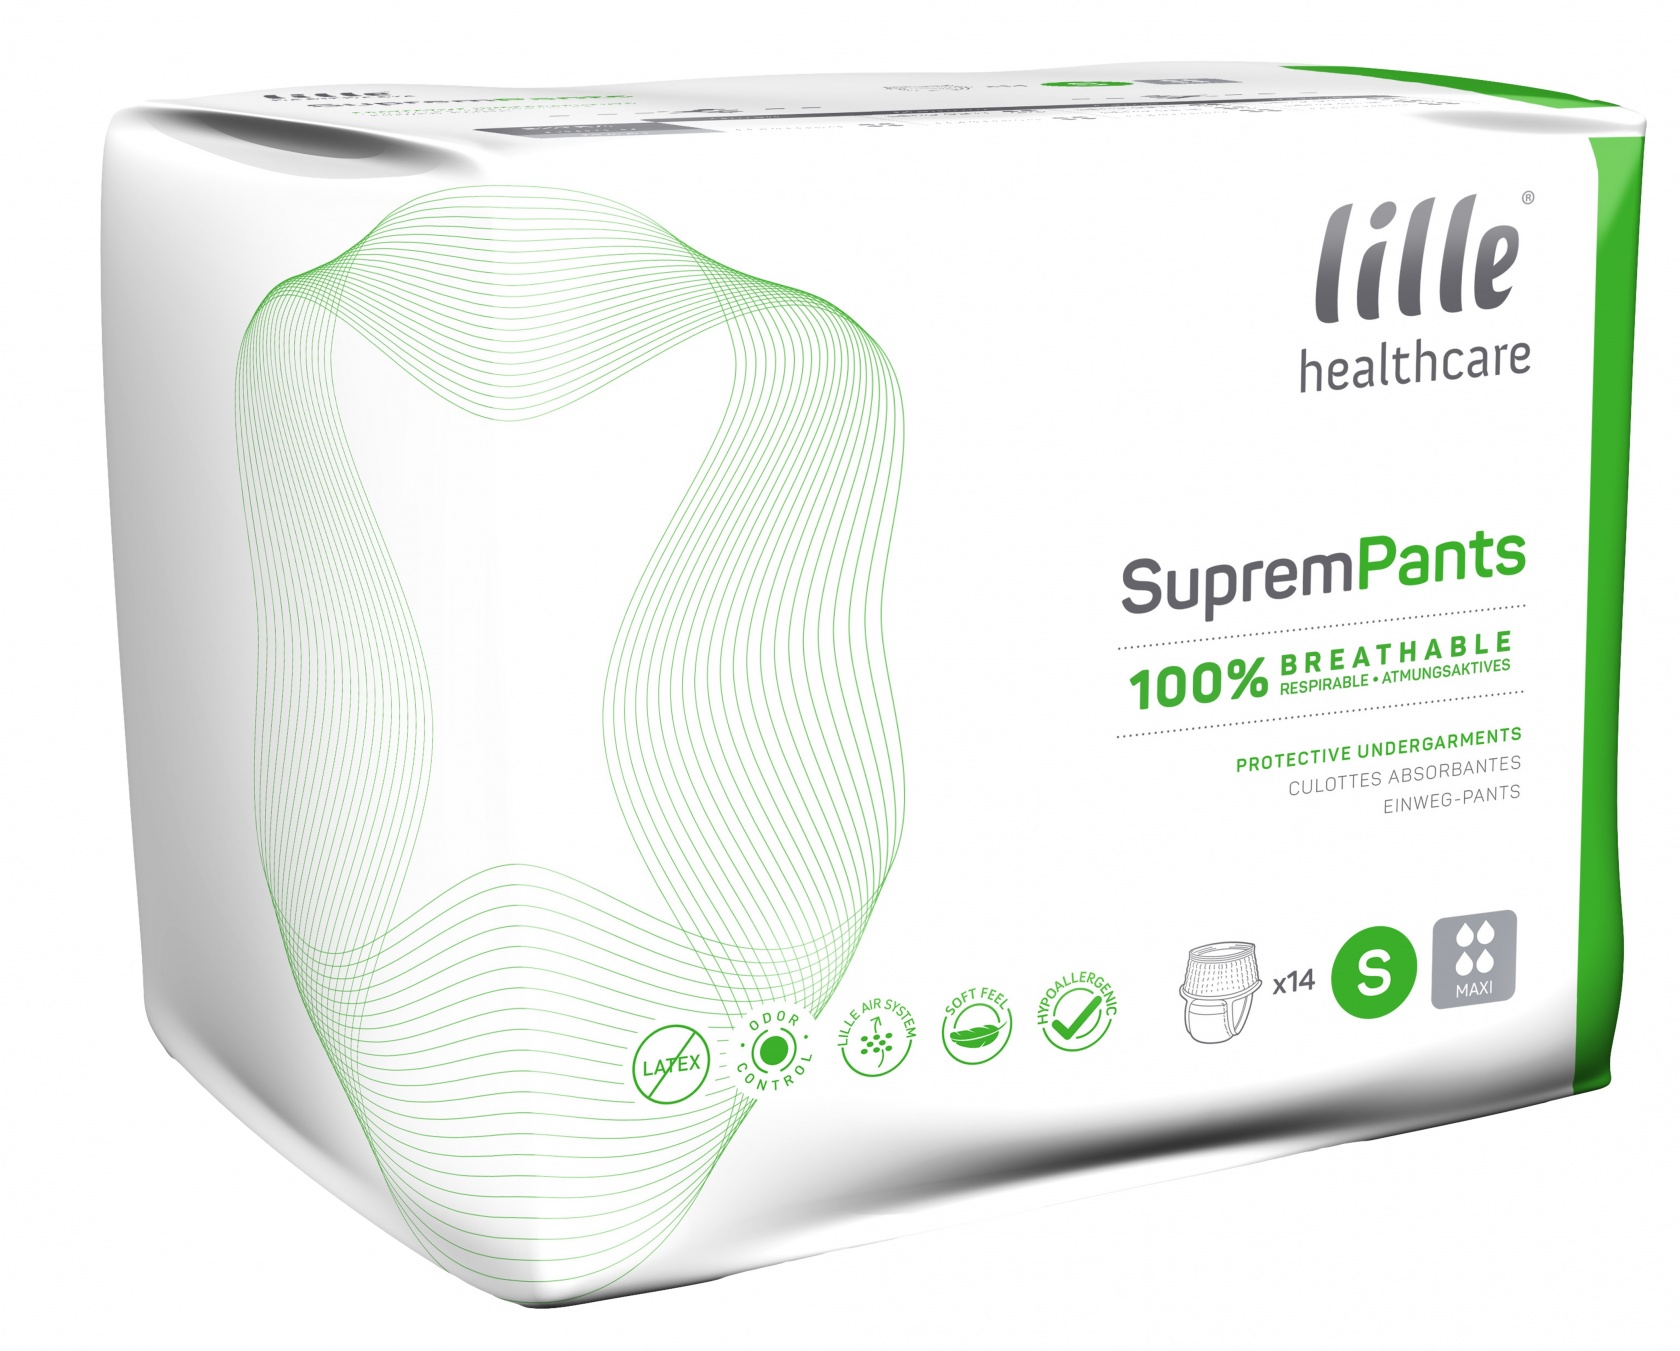 Lille Suprem Protective Underwear Large 1310mls image 0